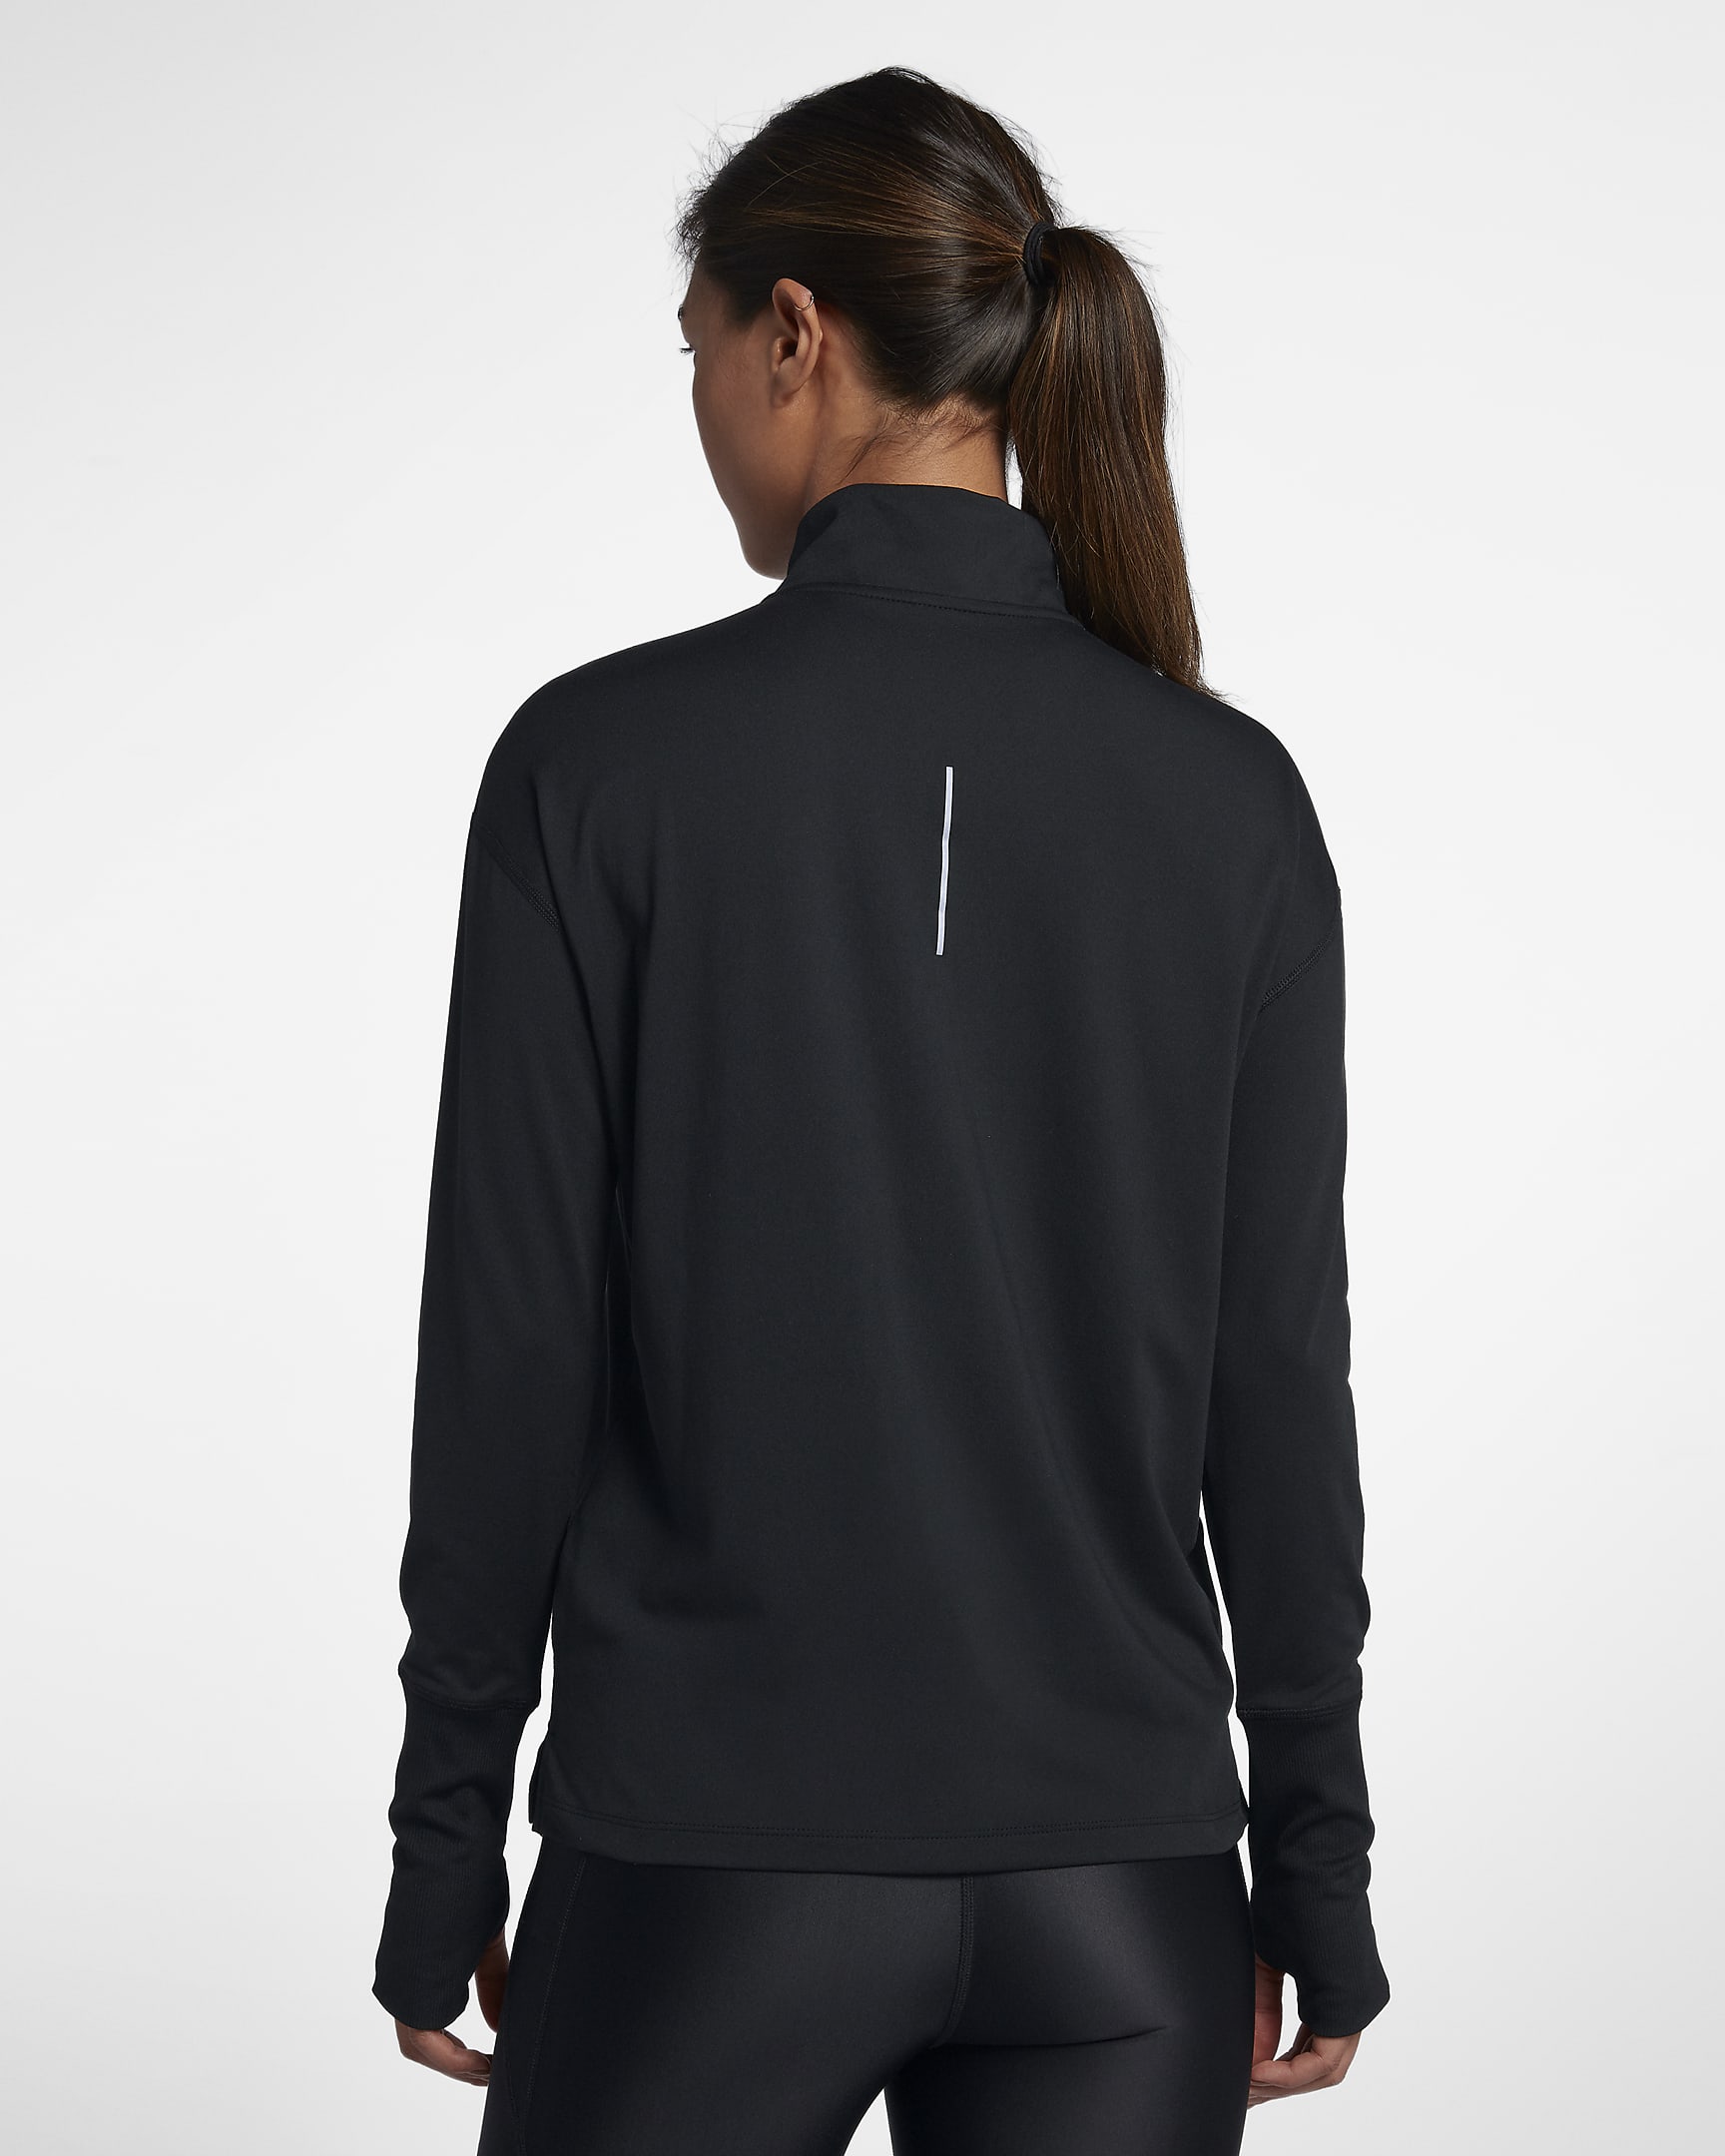 Nike Women's Half-Zip Running Top. Nike LU